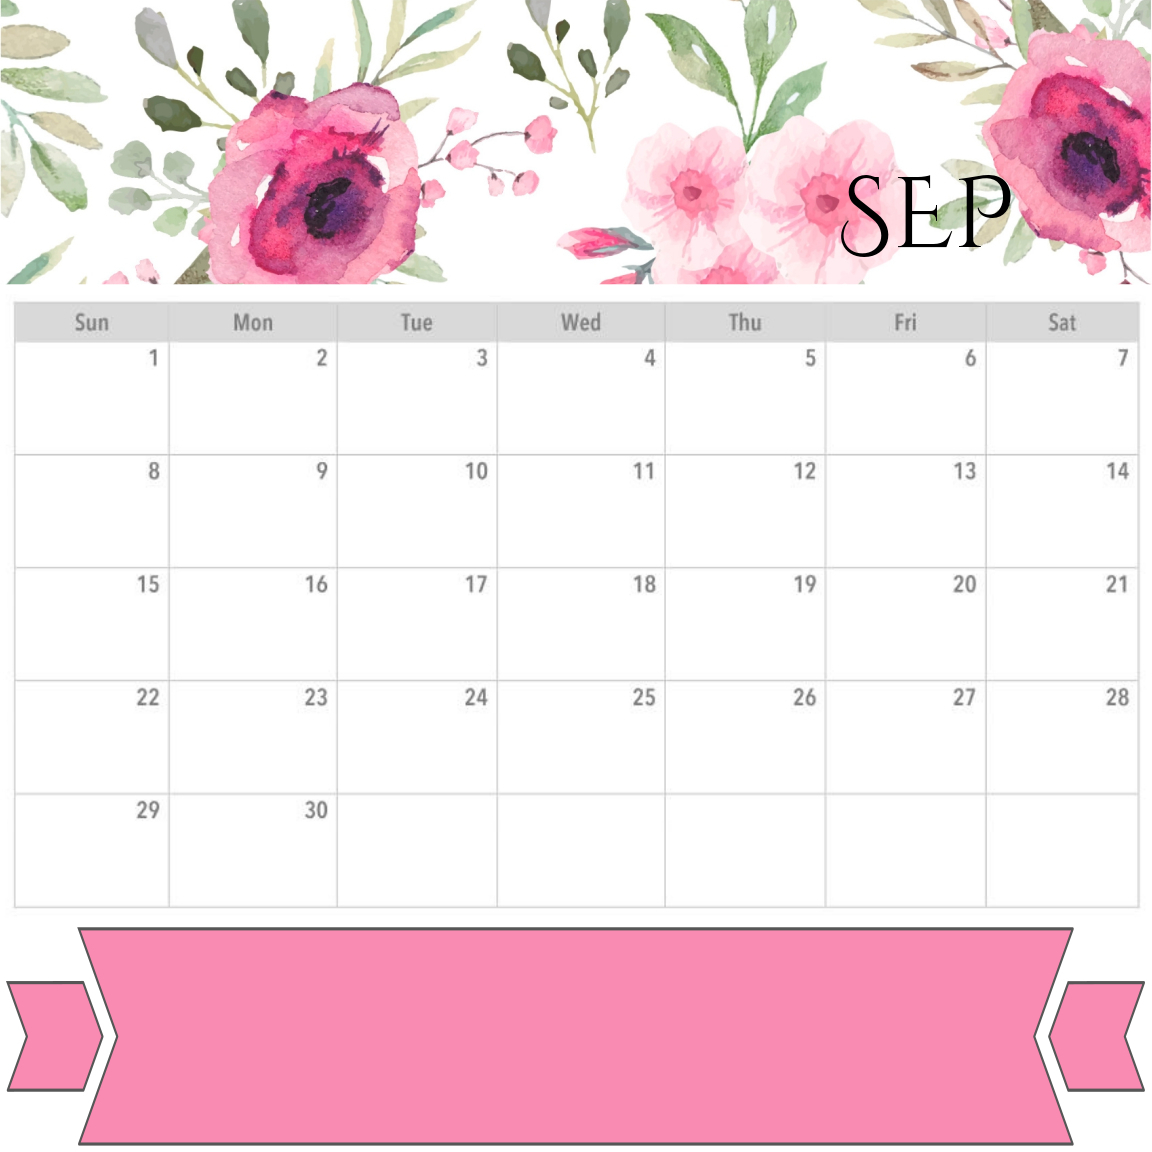 Printables - Planner - September 2019 Calendar Monthly